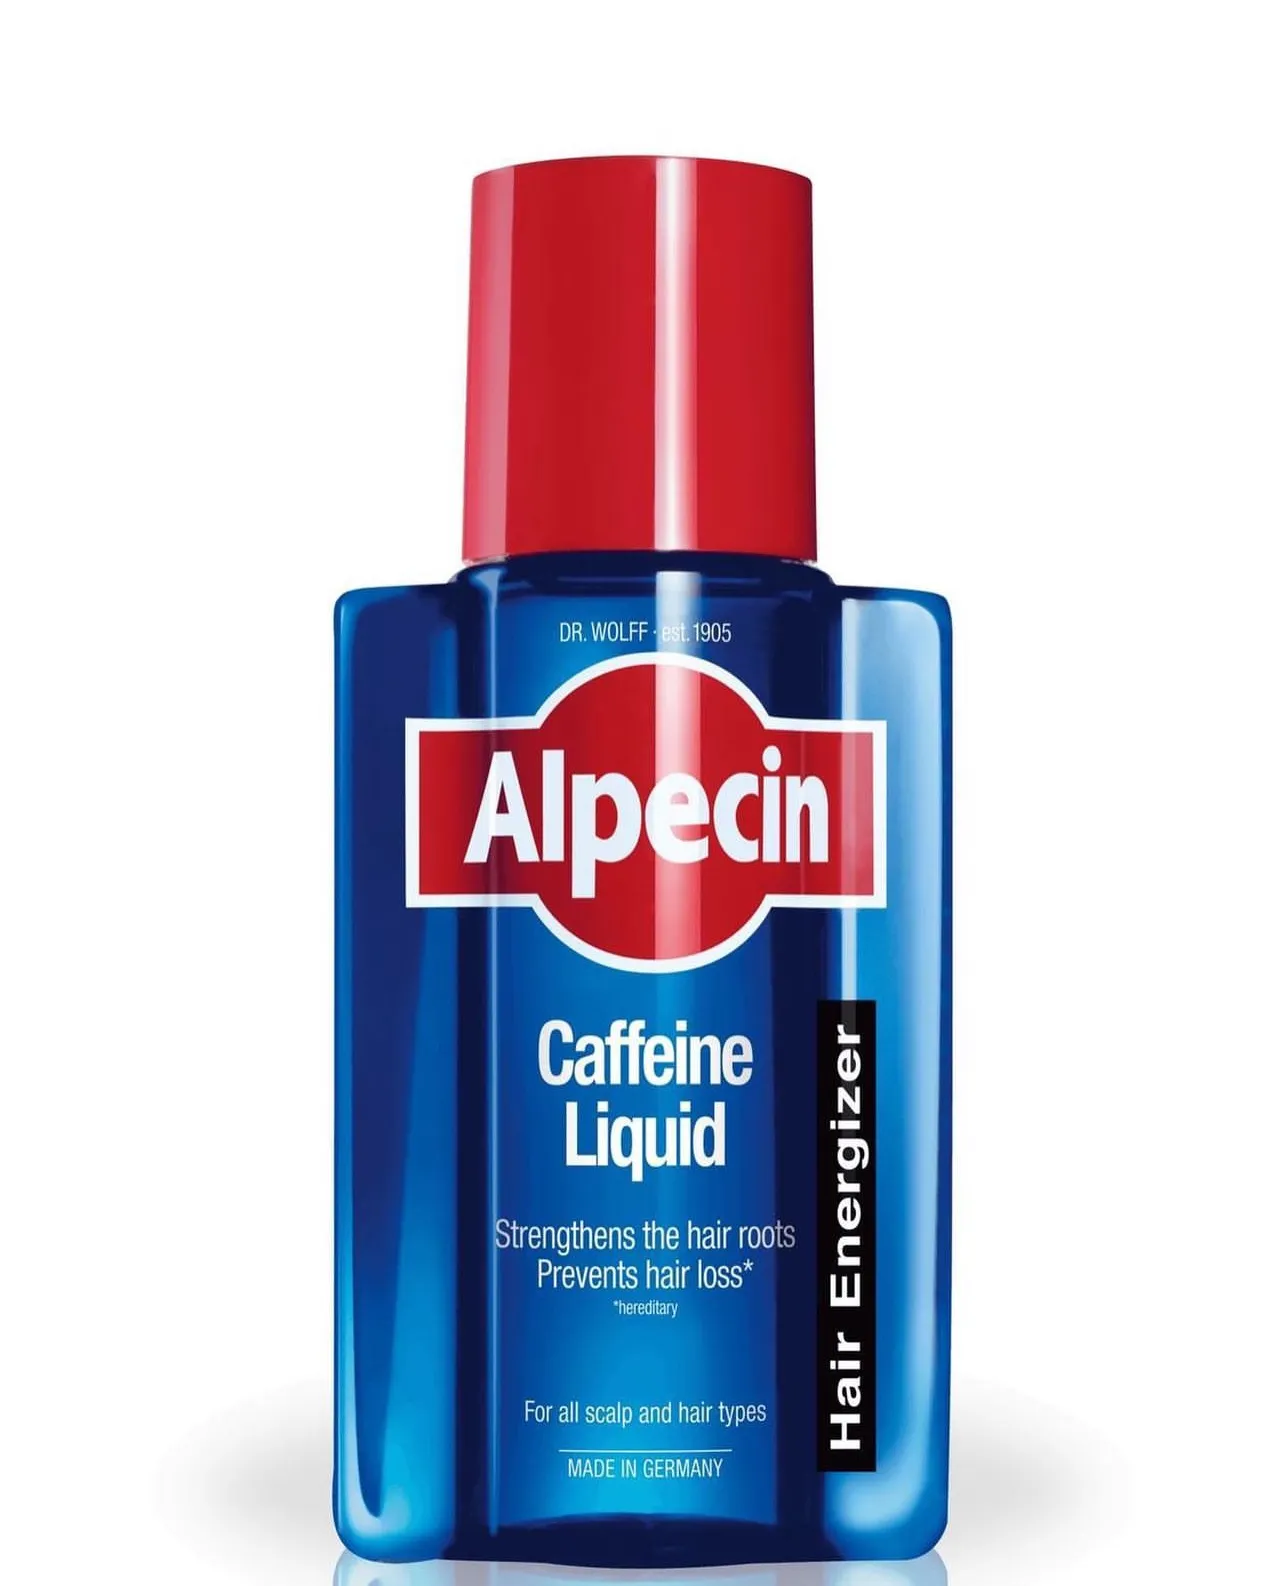 Bestselling Alpecin Caffeine Liquid Hair Recharger, 6.76 fl oz, Scalp Tonic for Men's Thinning Hair Growth,